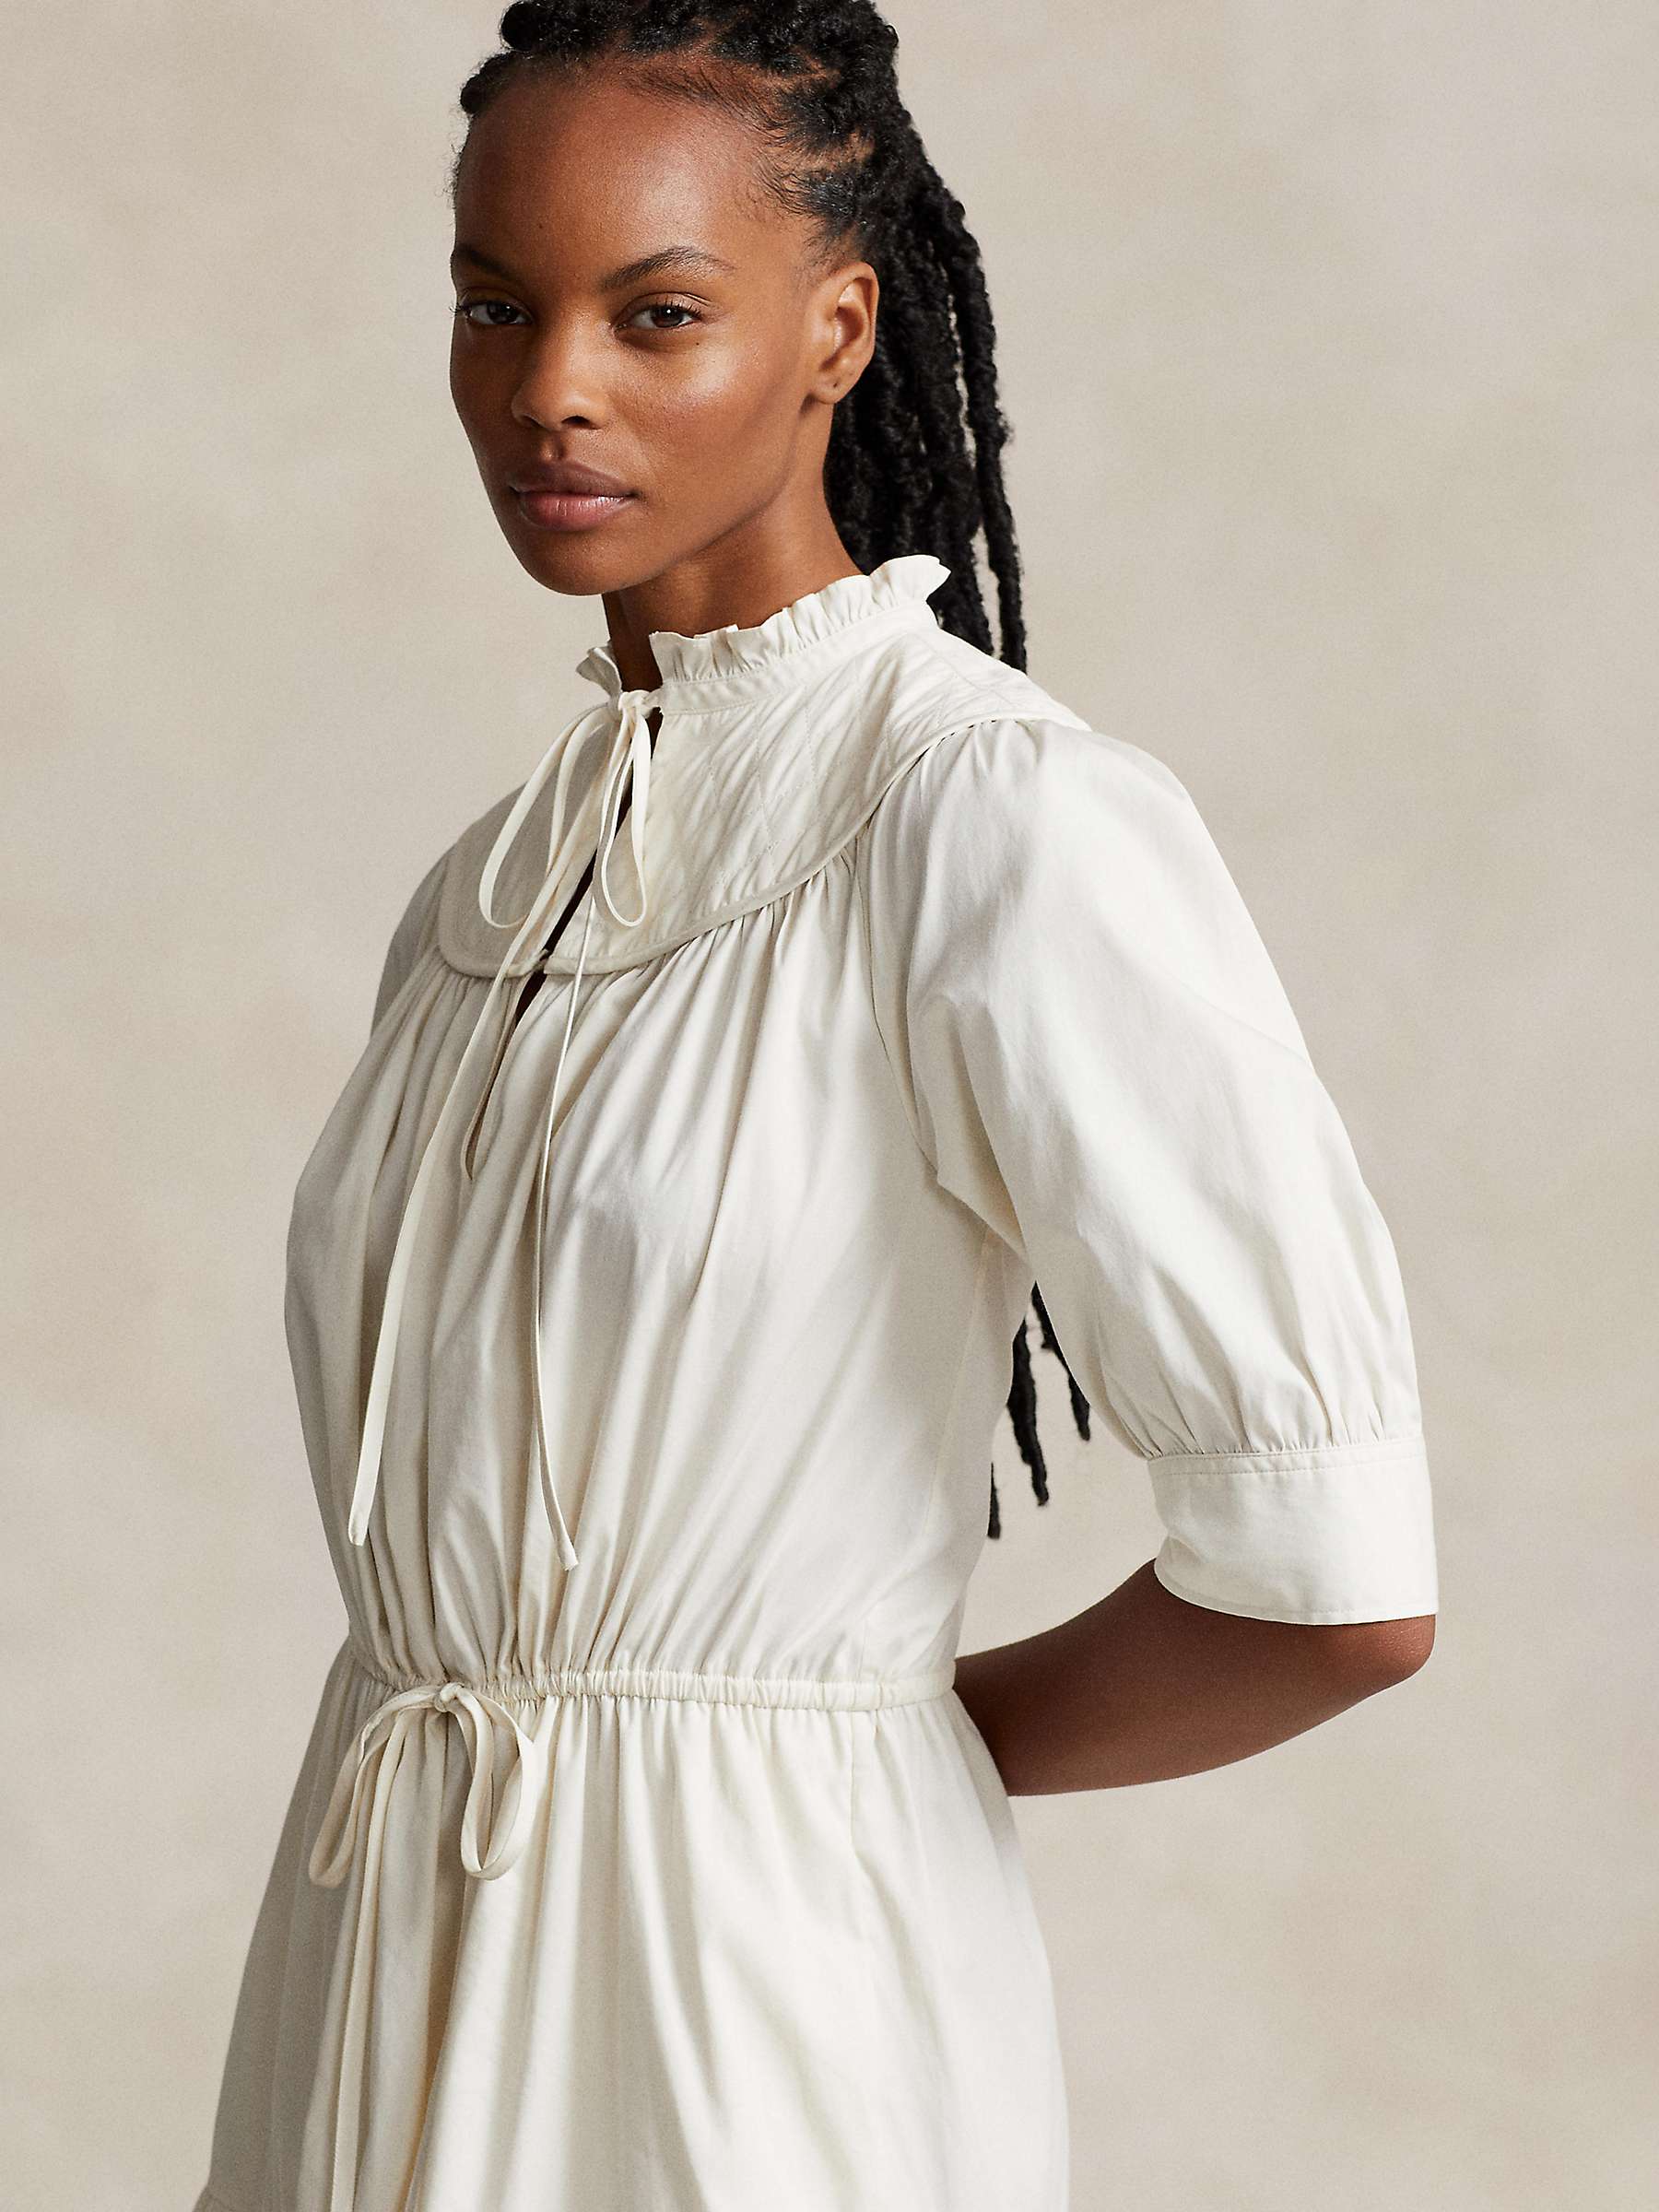 Buy Polo Ralph Lauren Elia Tiered Midi Dress, Natural Online at johnlewis.com